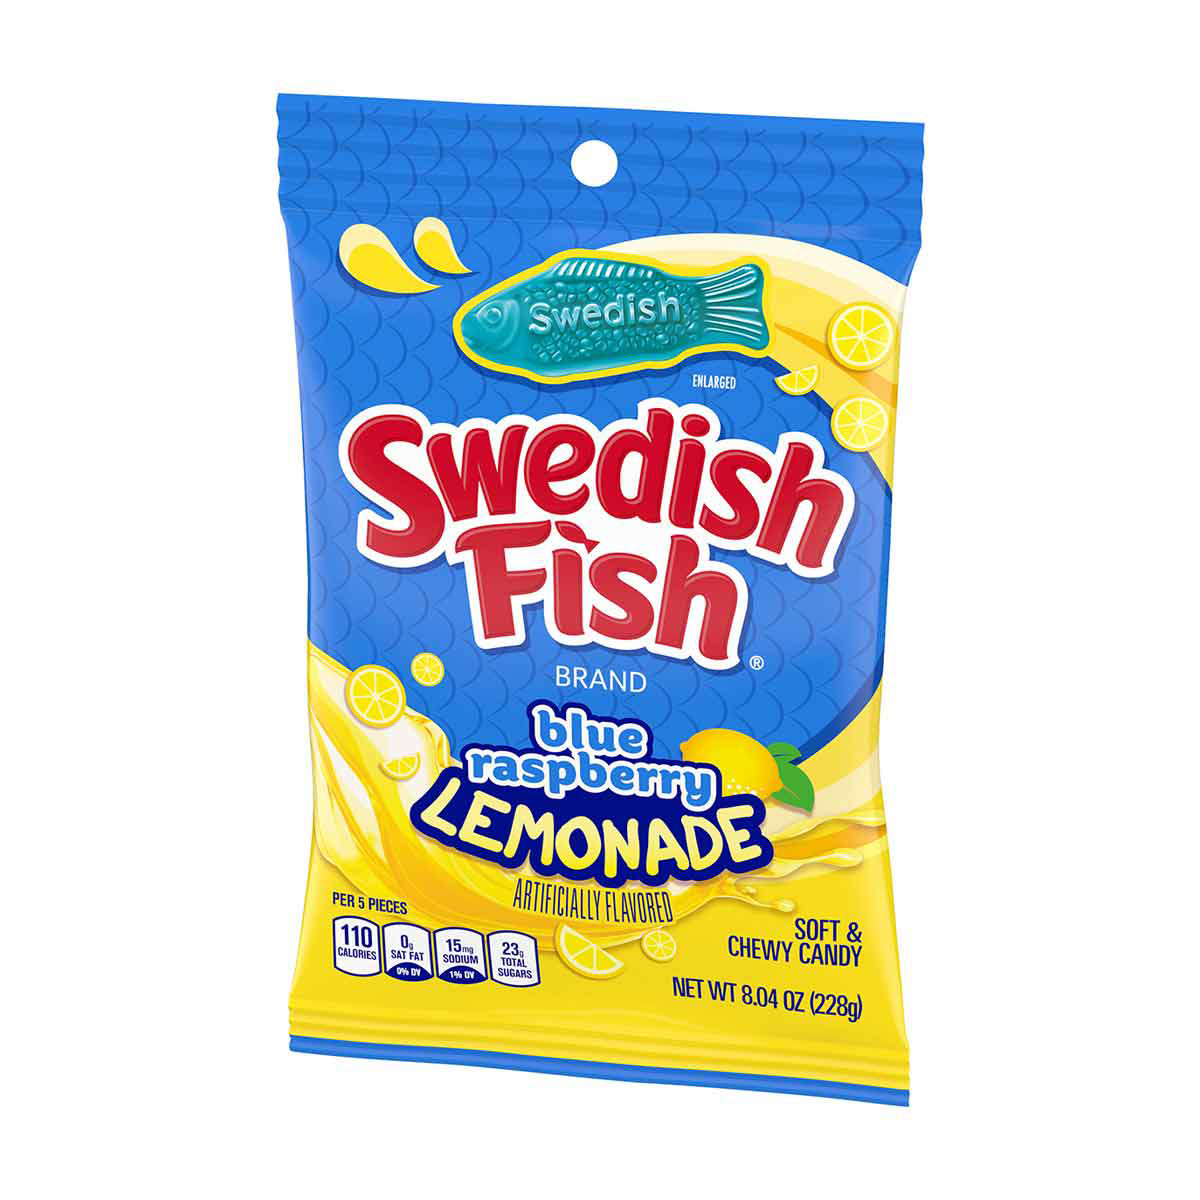 Swedish Fish Blue Raspberry Lemonade Soft & Chewy Candy, 8.04 oz